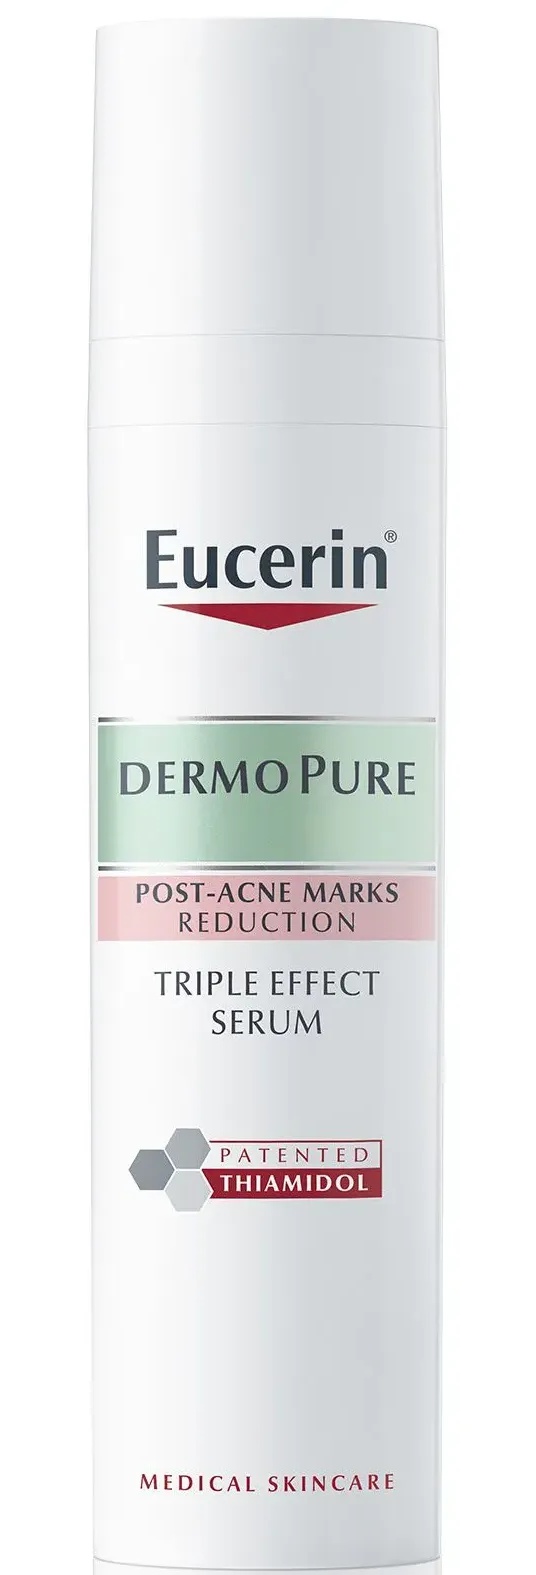 Eucerin Dermopure Triple Effect Serum